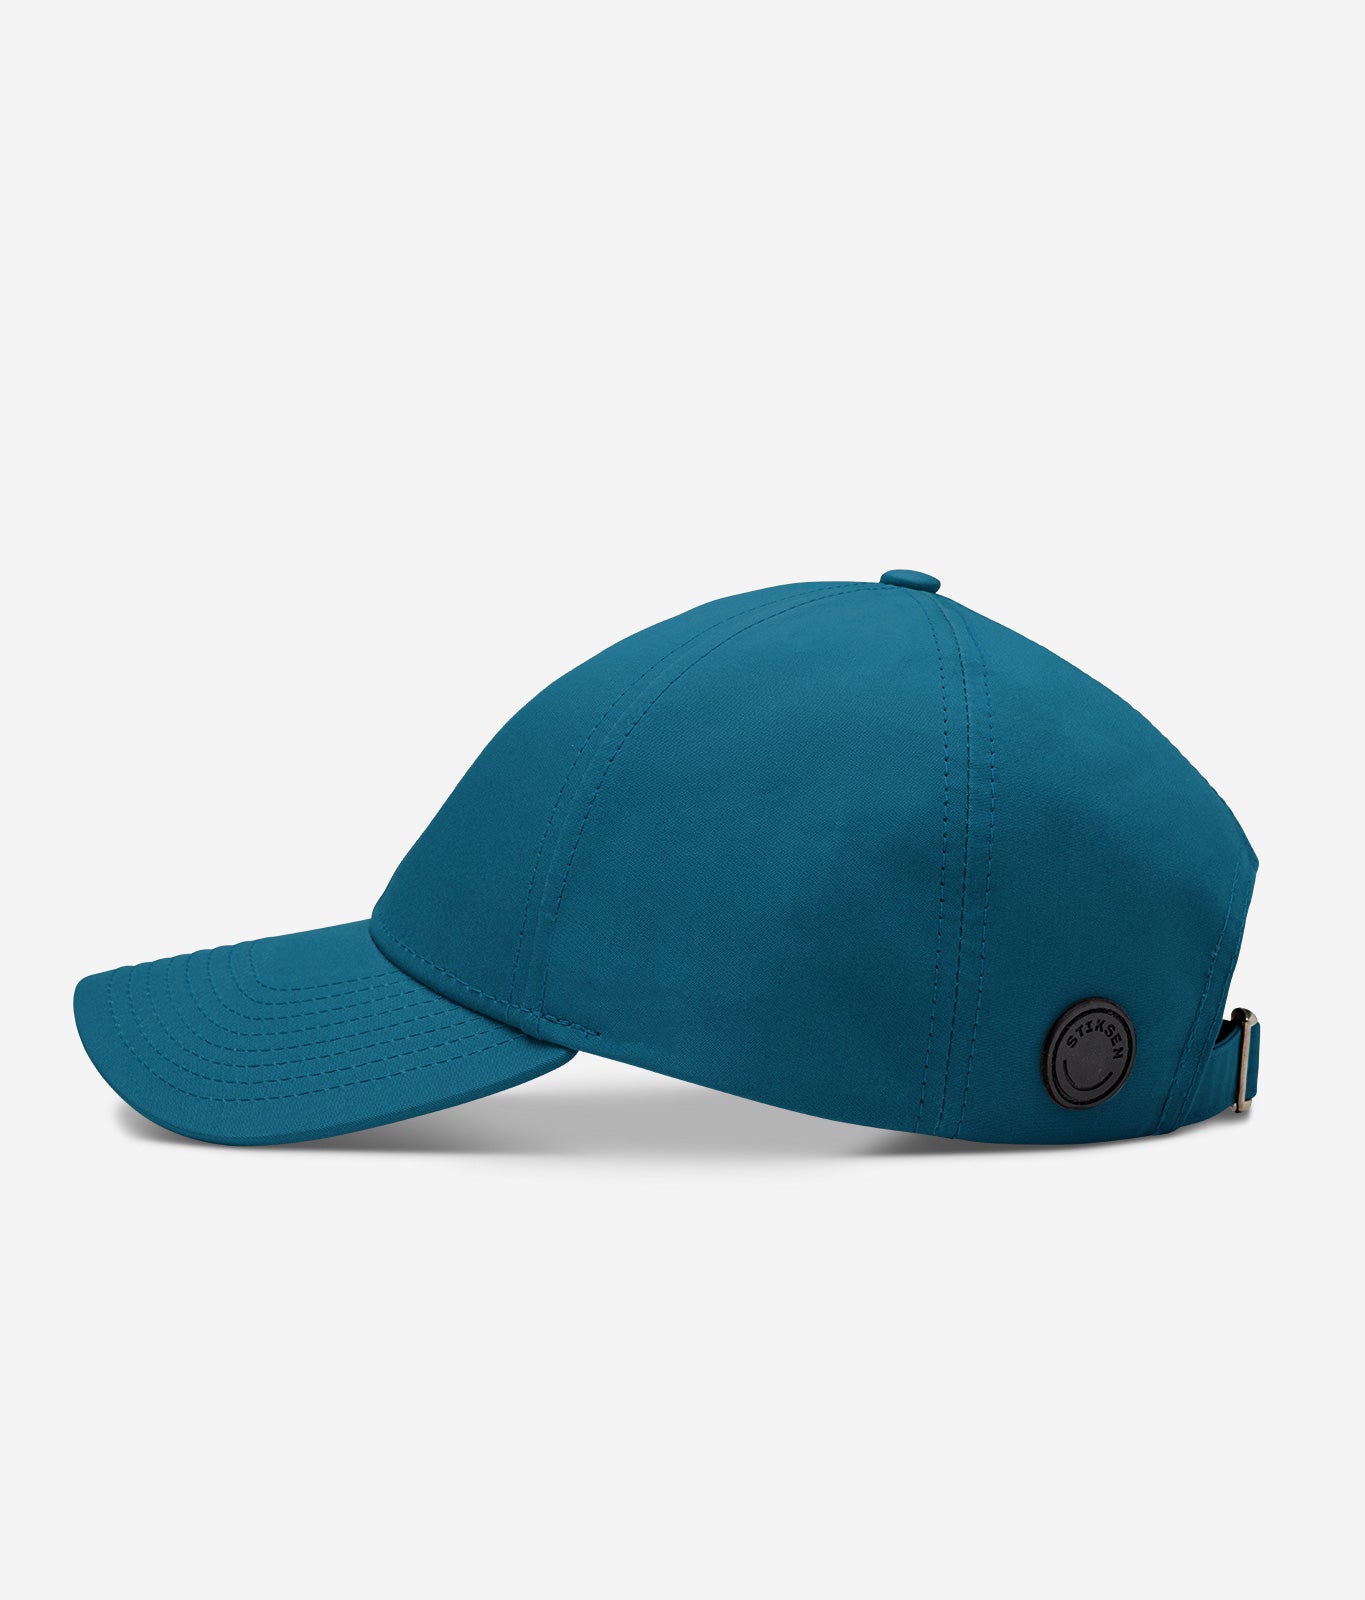 Stiksen, Premium baseball caps for men and women